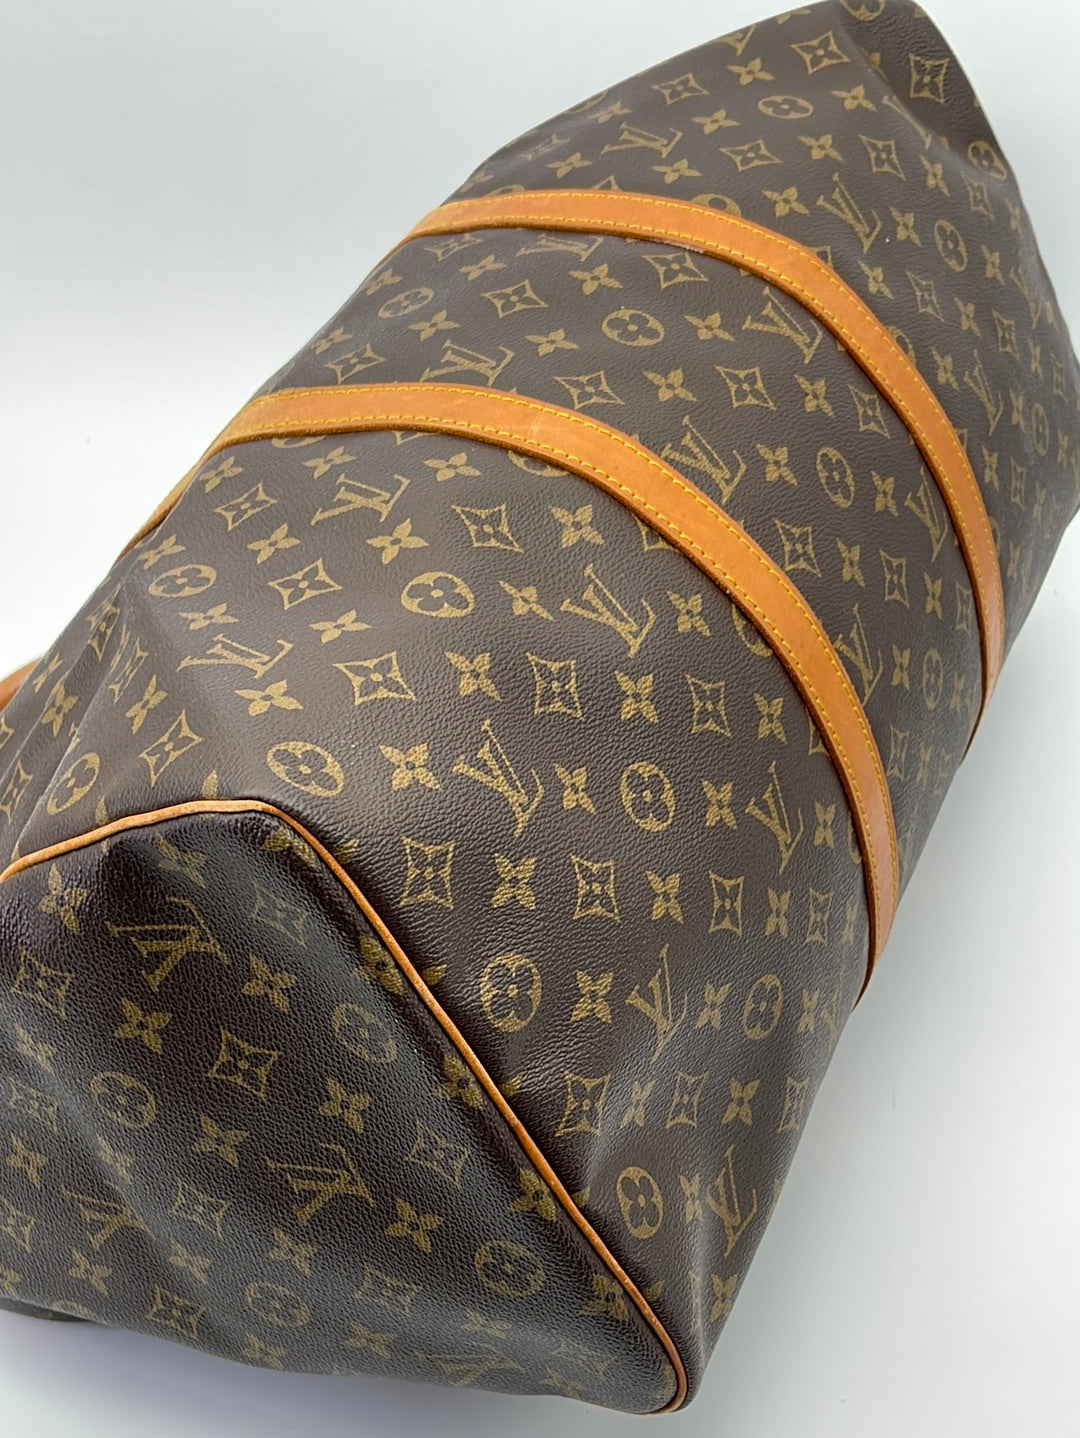 Vintage Louis Vuitton Keepall 50 Monogram Duffel Bag VI881 062823